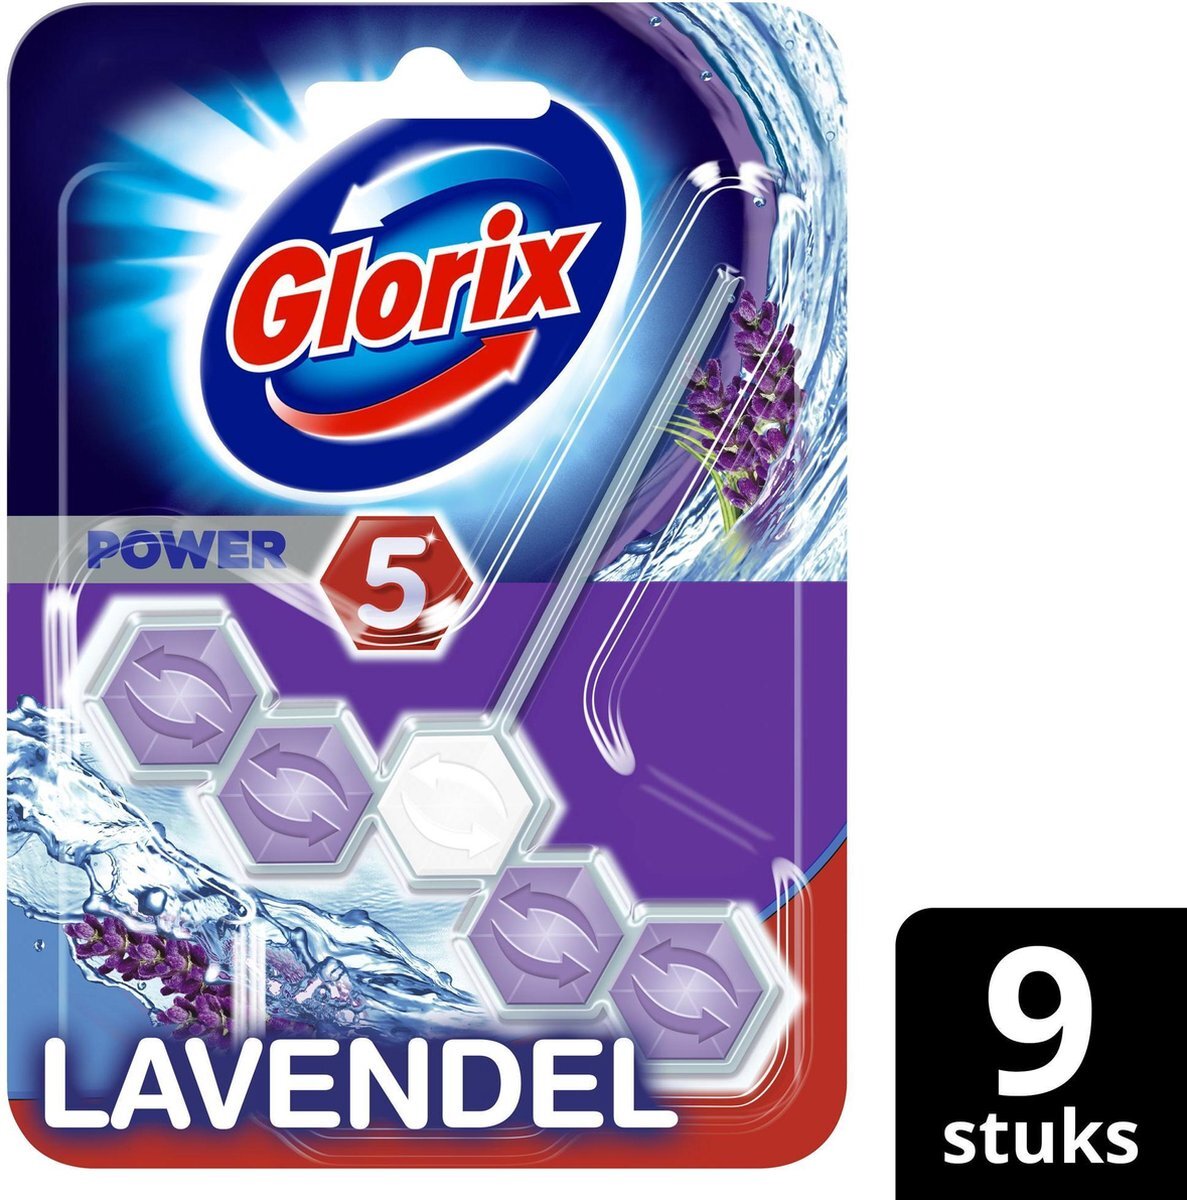 Glorix Power Lavendel Wc Blok